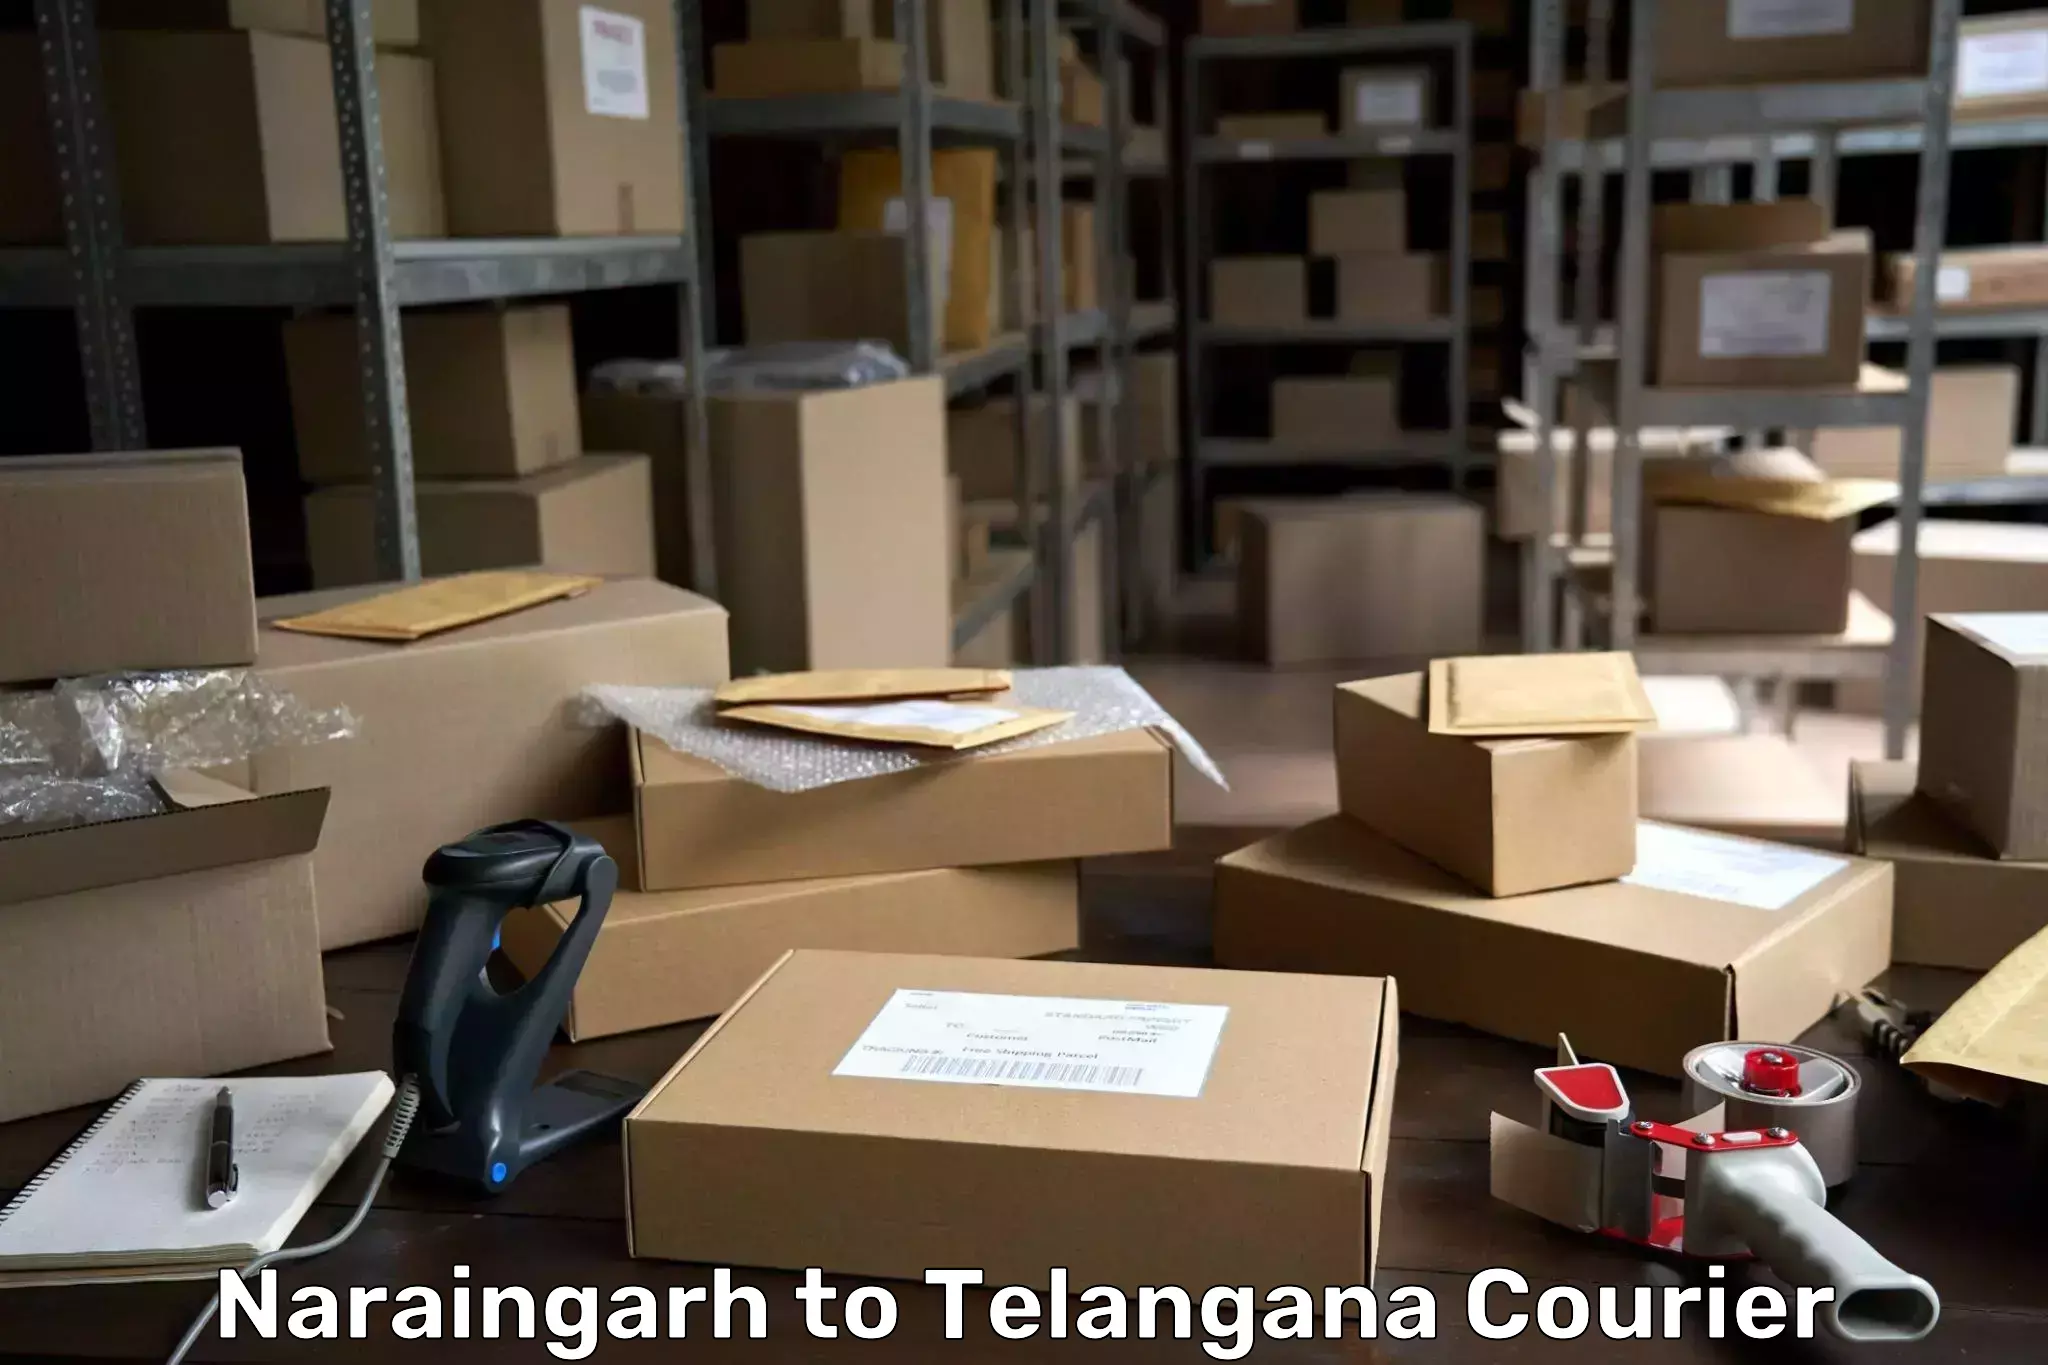 Nationwide delivery network Naraingarh to Amangal